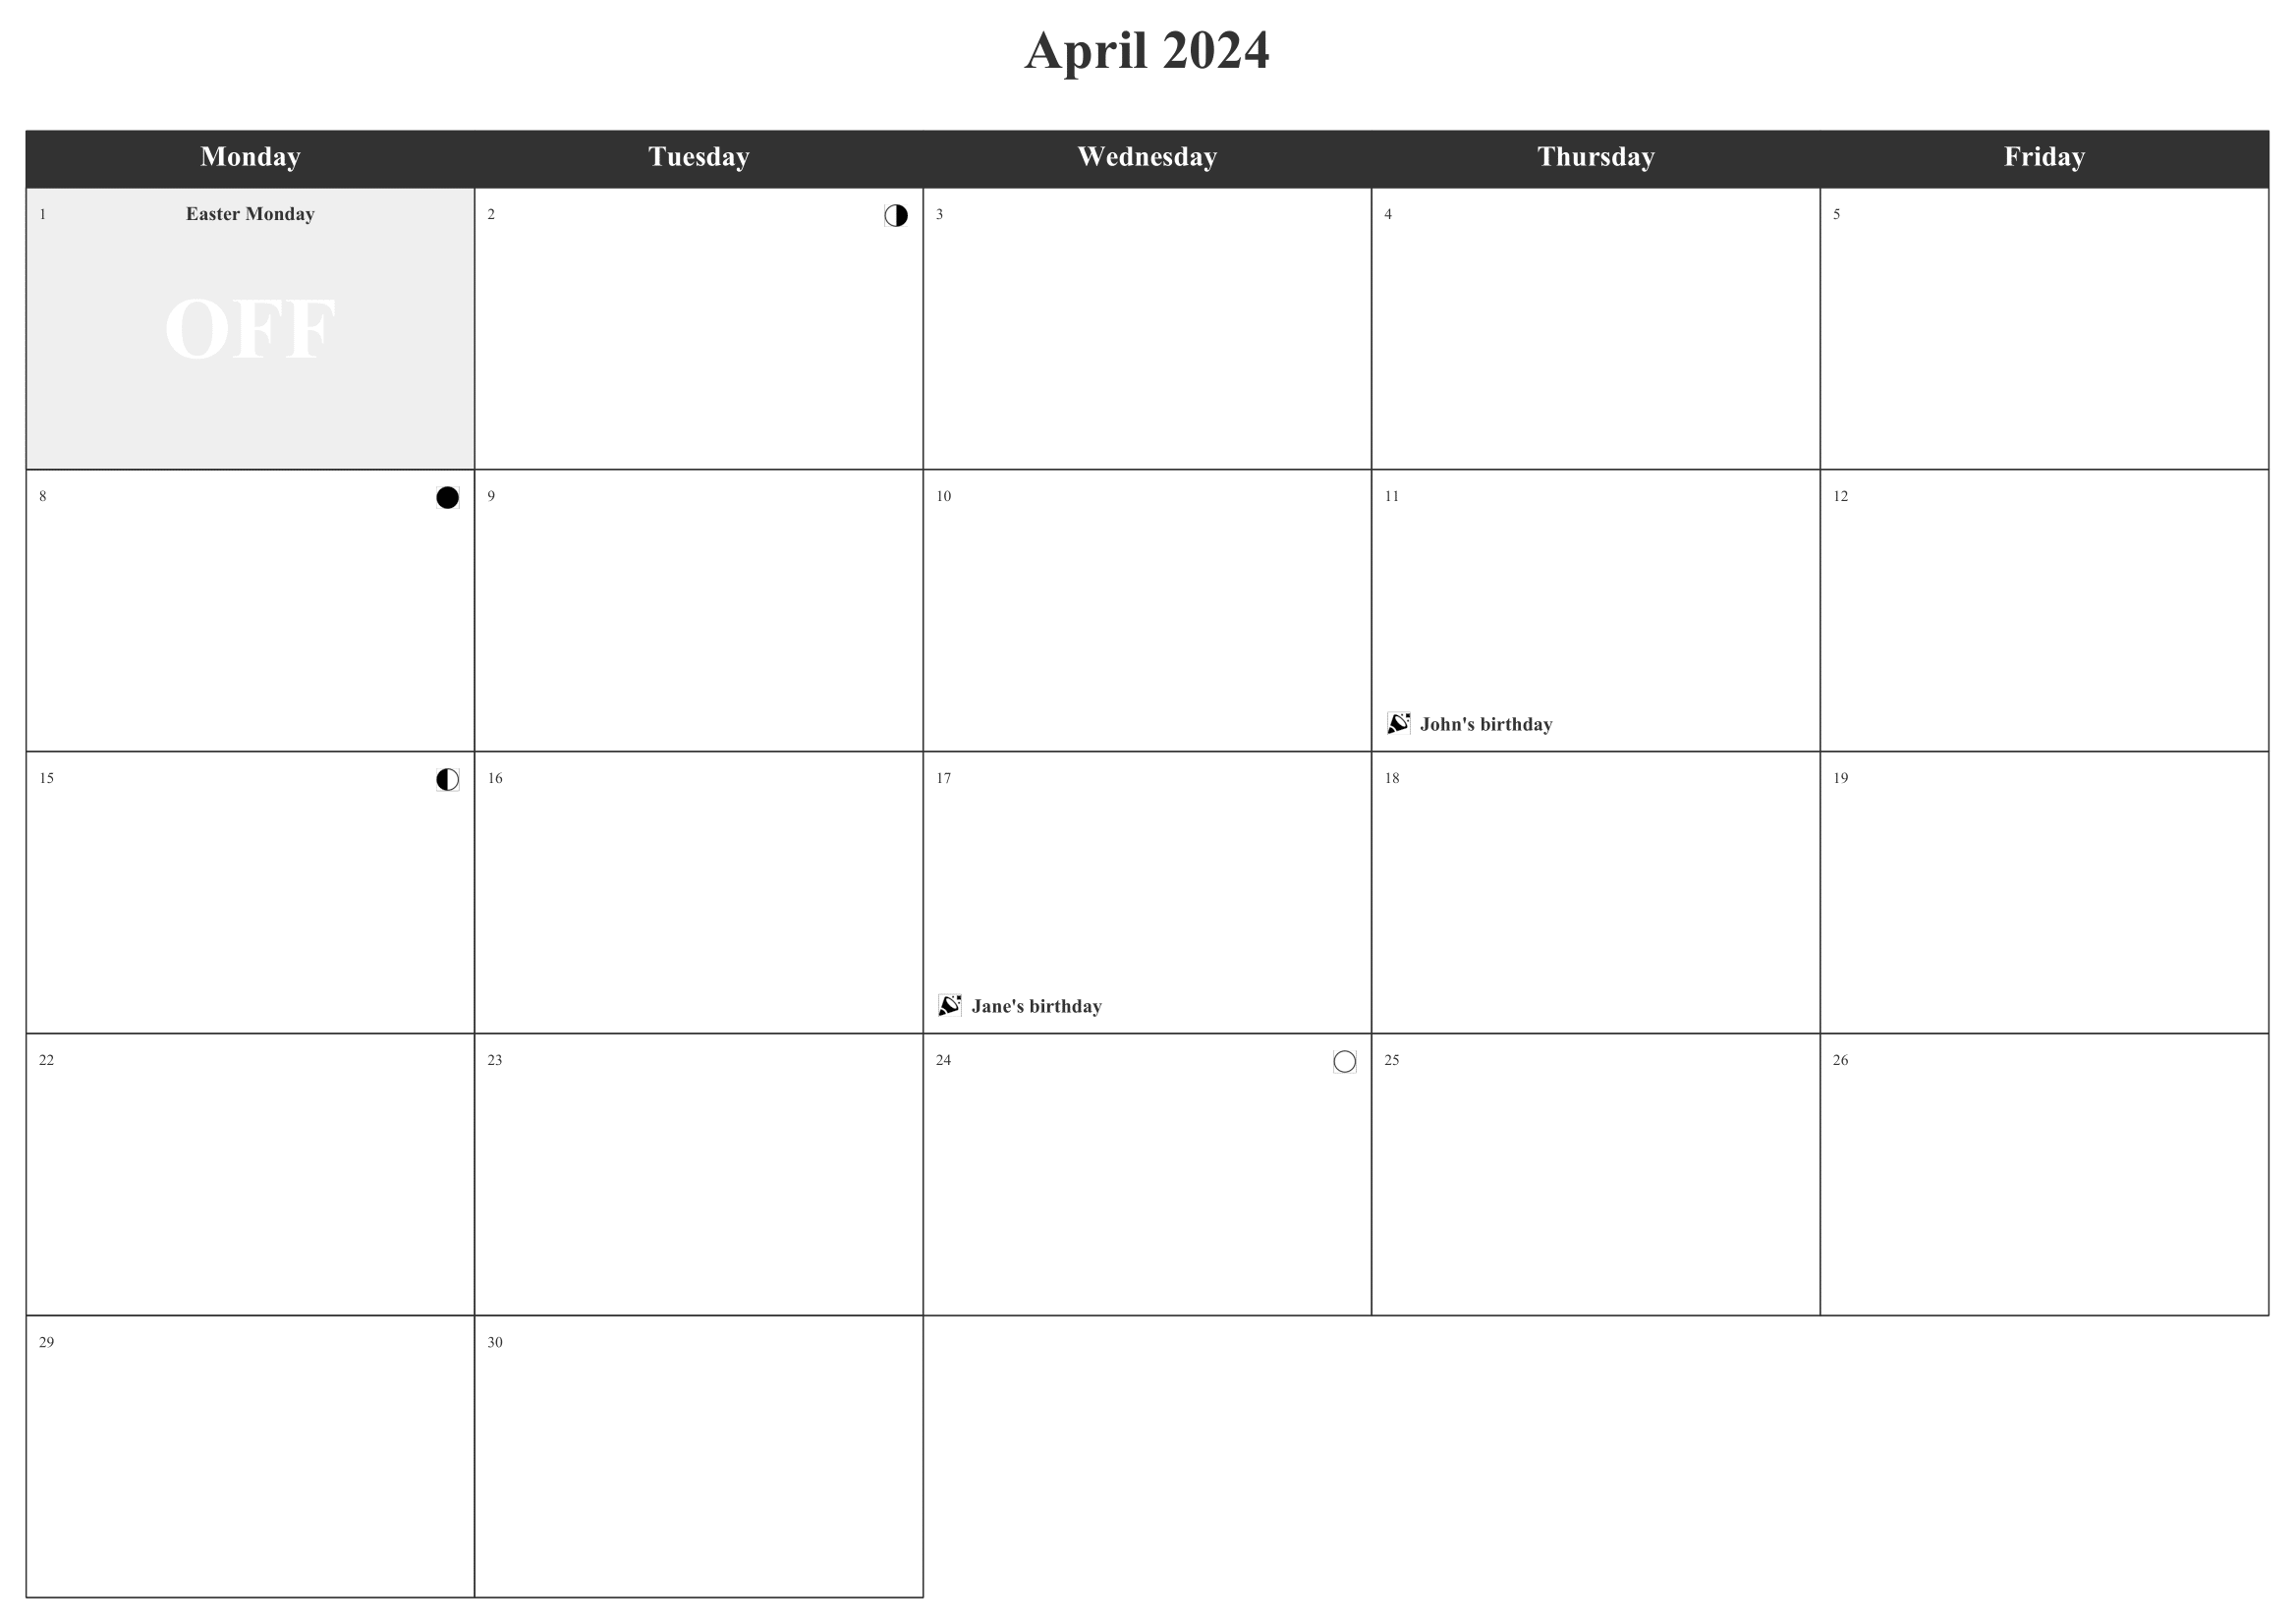 Monthly calendar - Special dates